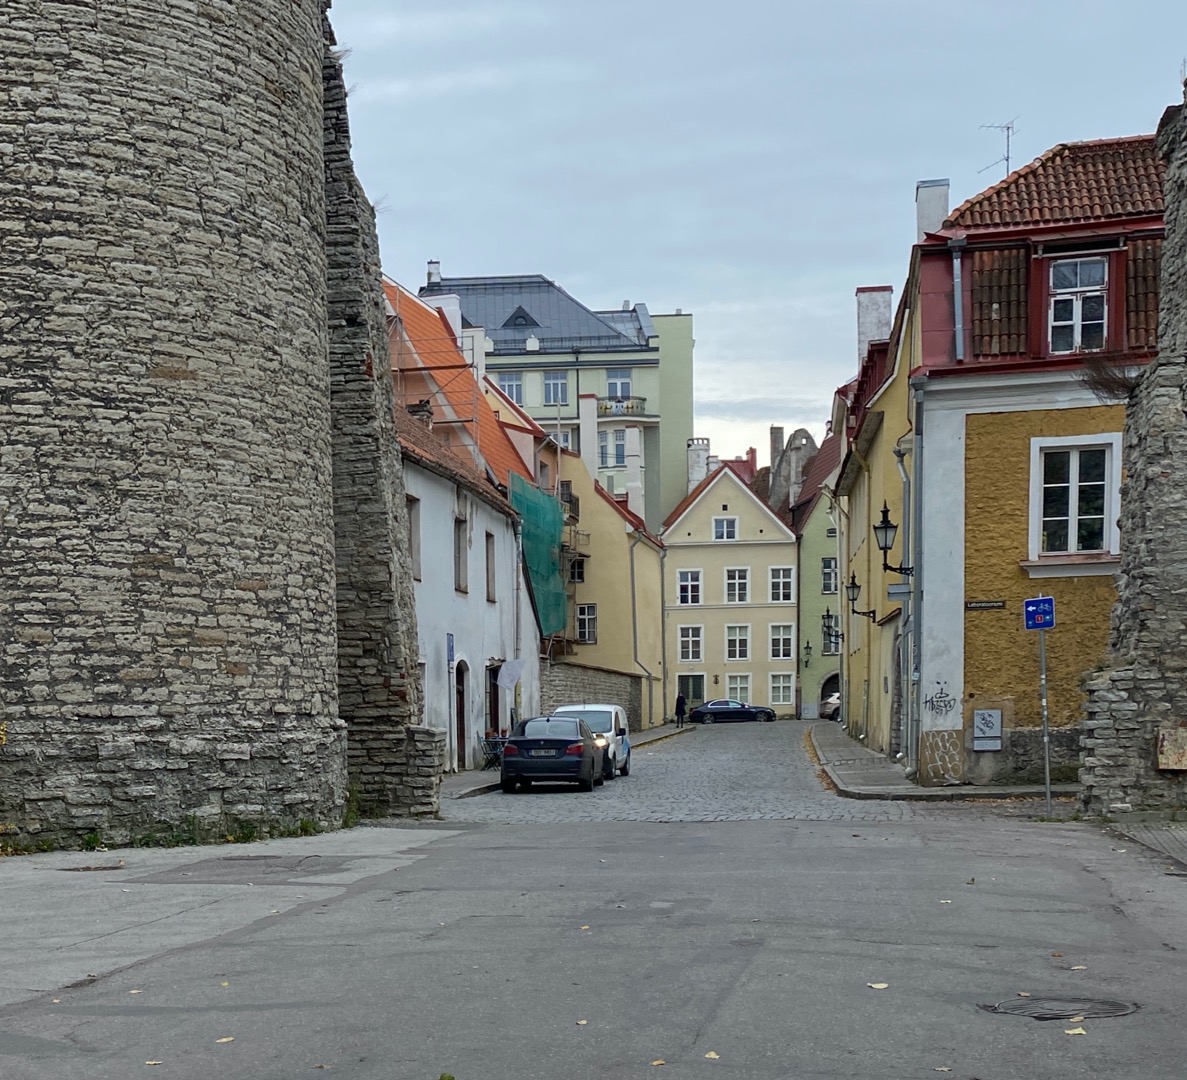 Artillery Street in Tallinn Old Town rephoto